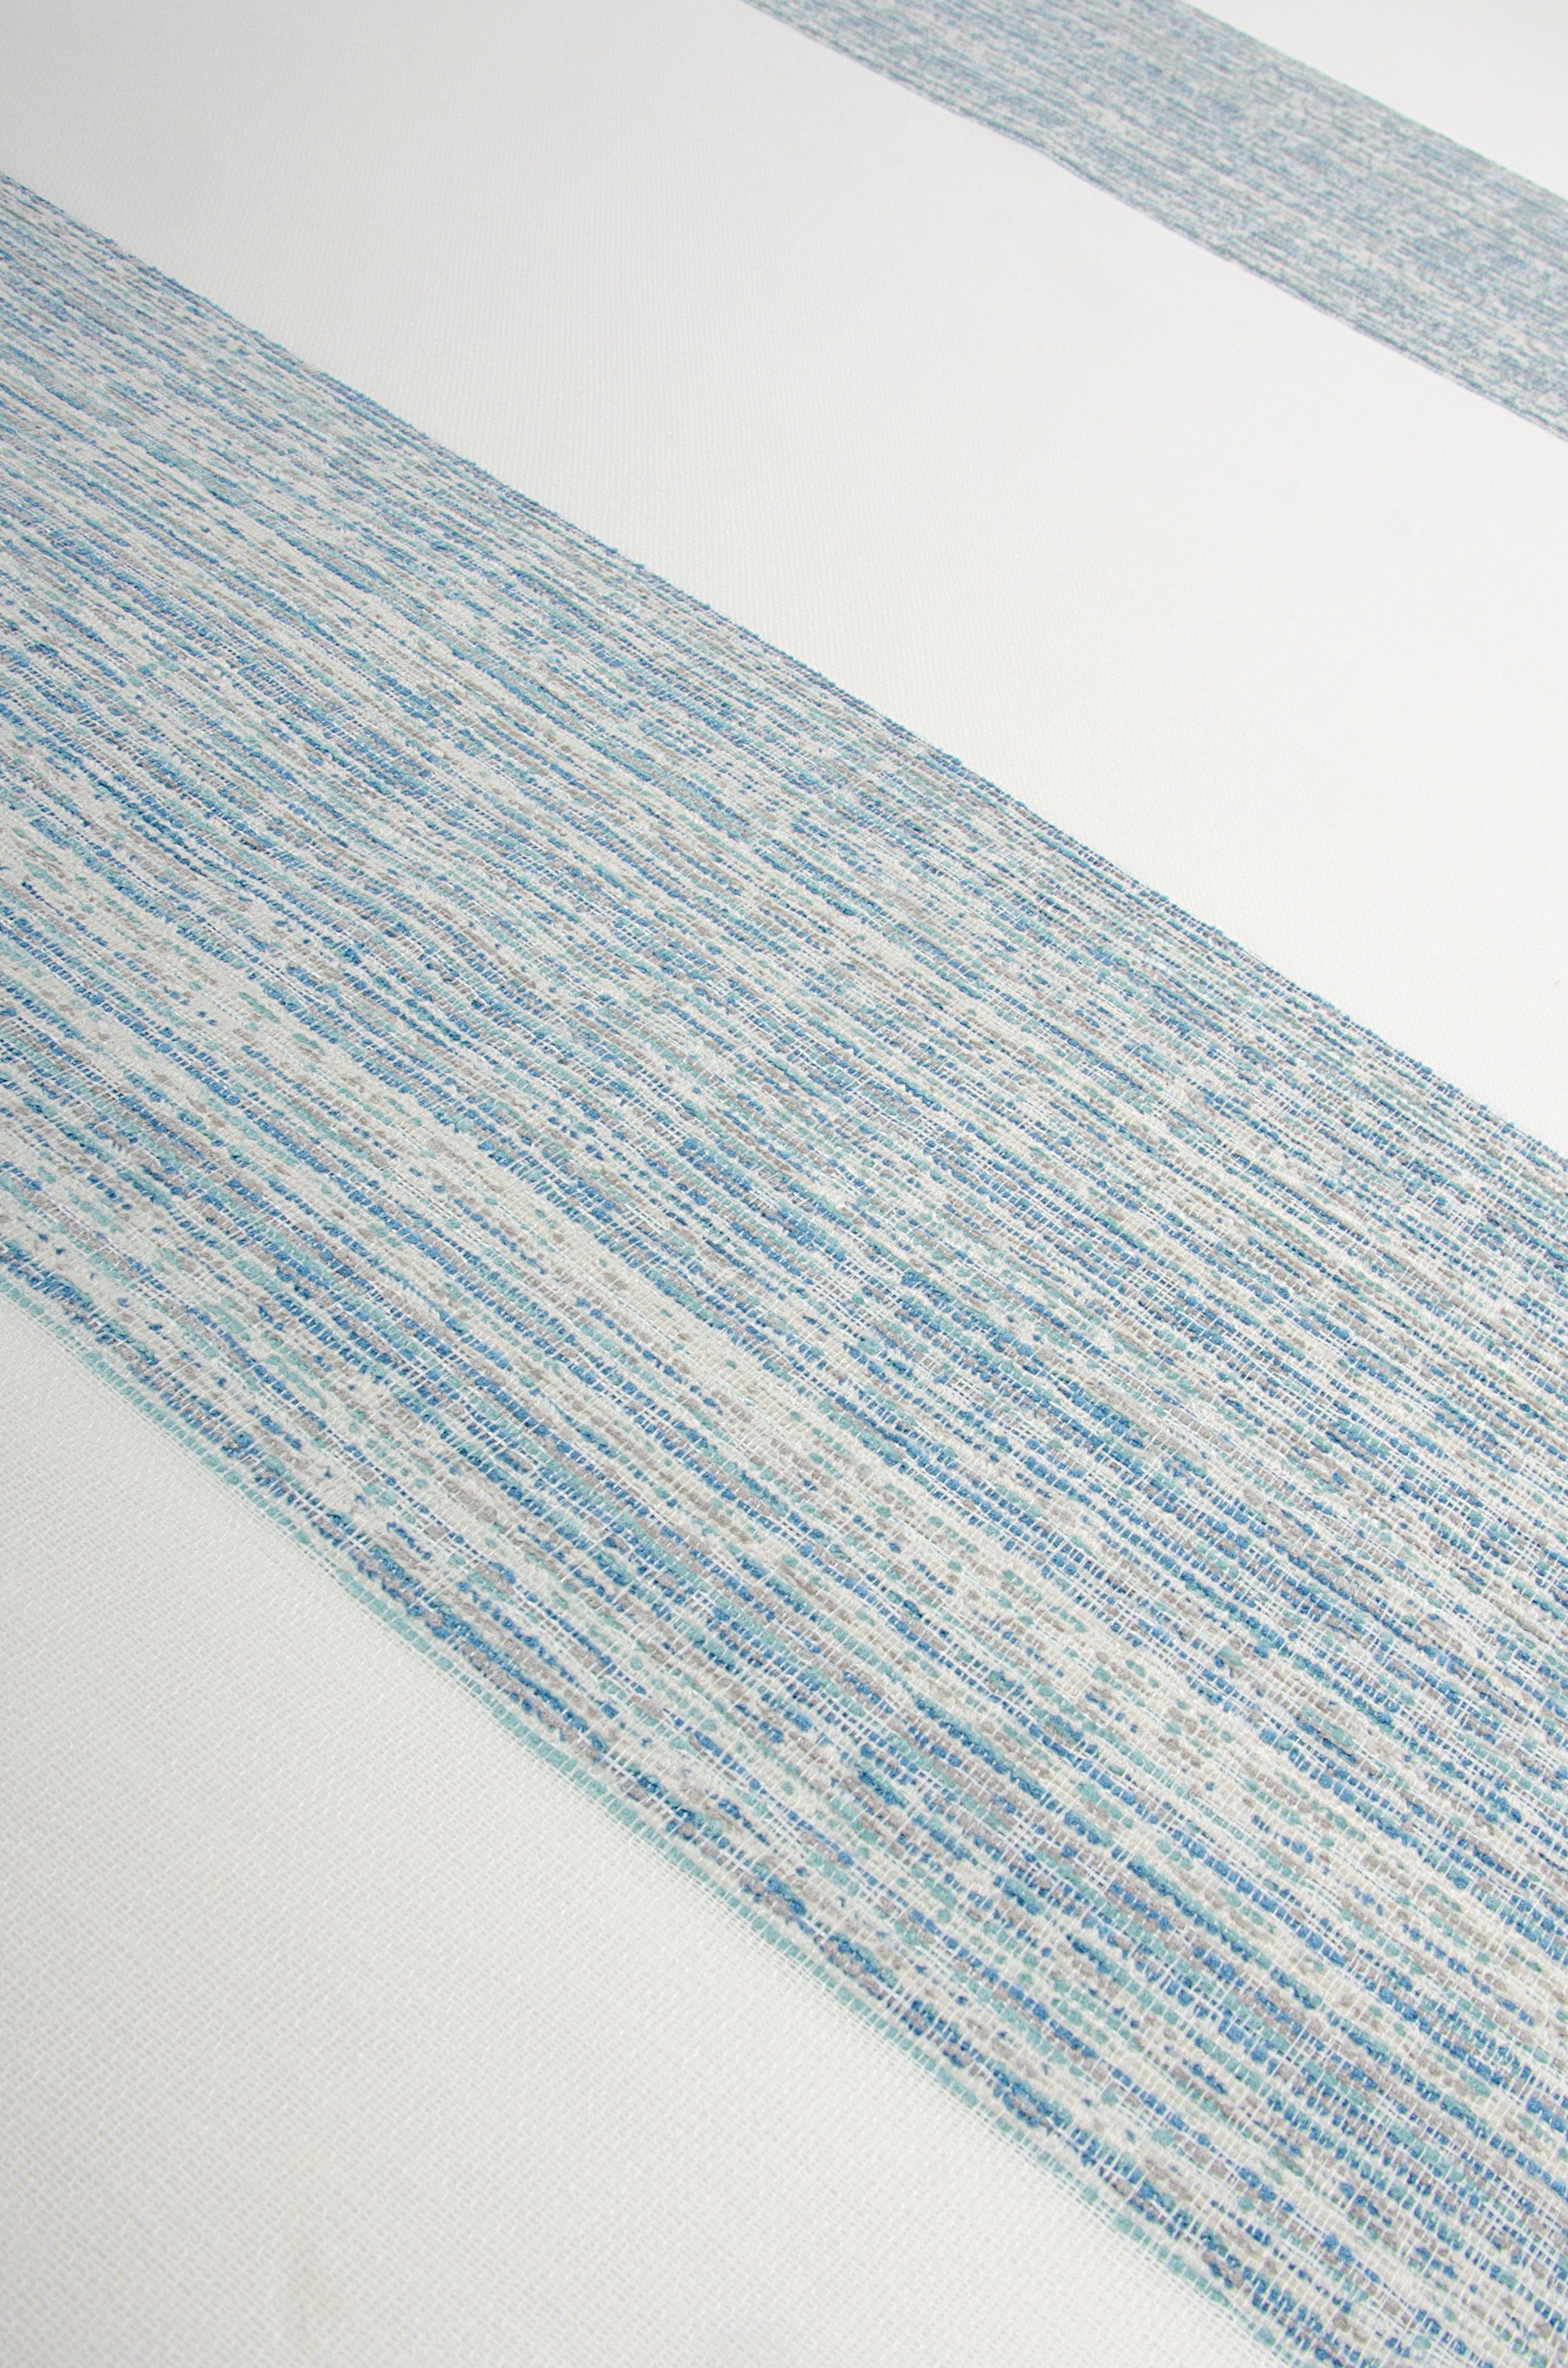 Cara, for blau you!, halbtransparent, Ösen moderner Jacquard, mit Vorhang St), Streifen Effektstruktur (1 Neutex